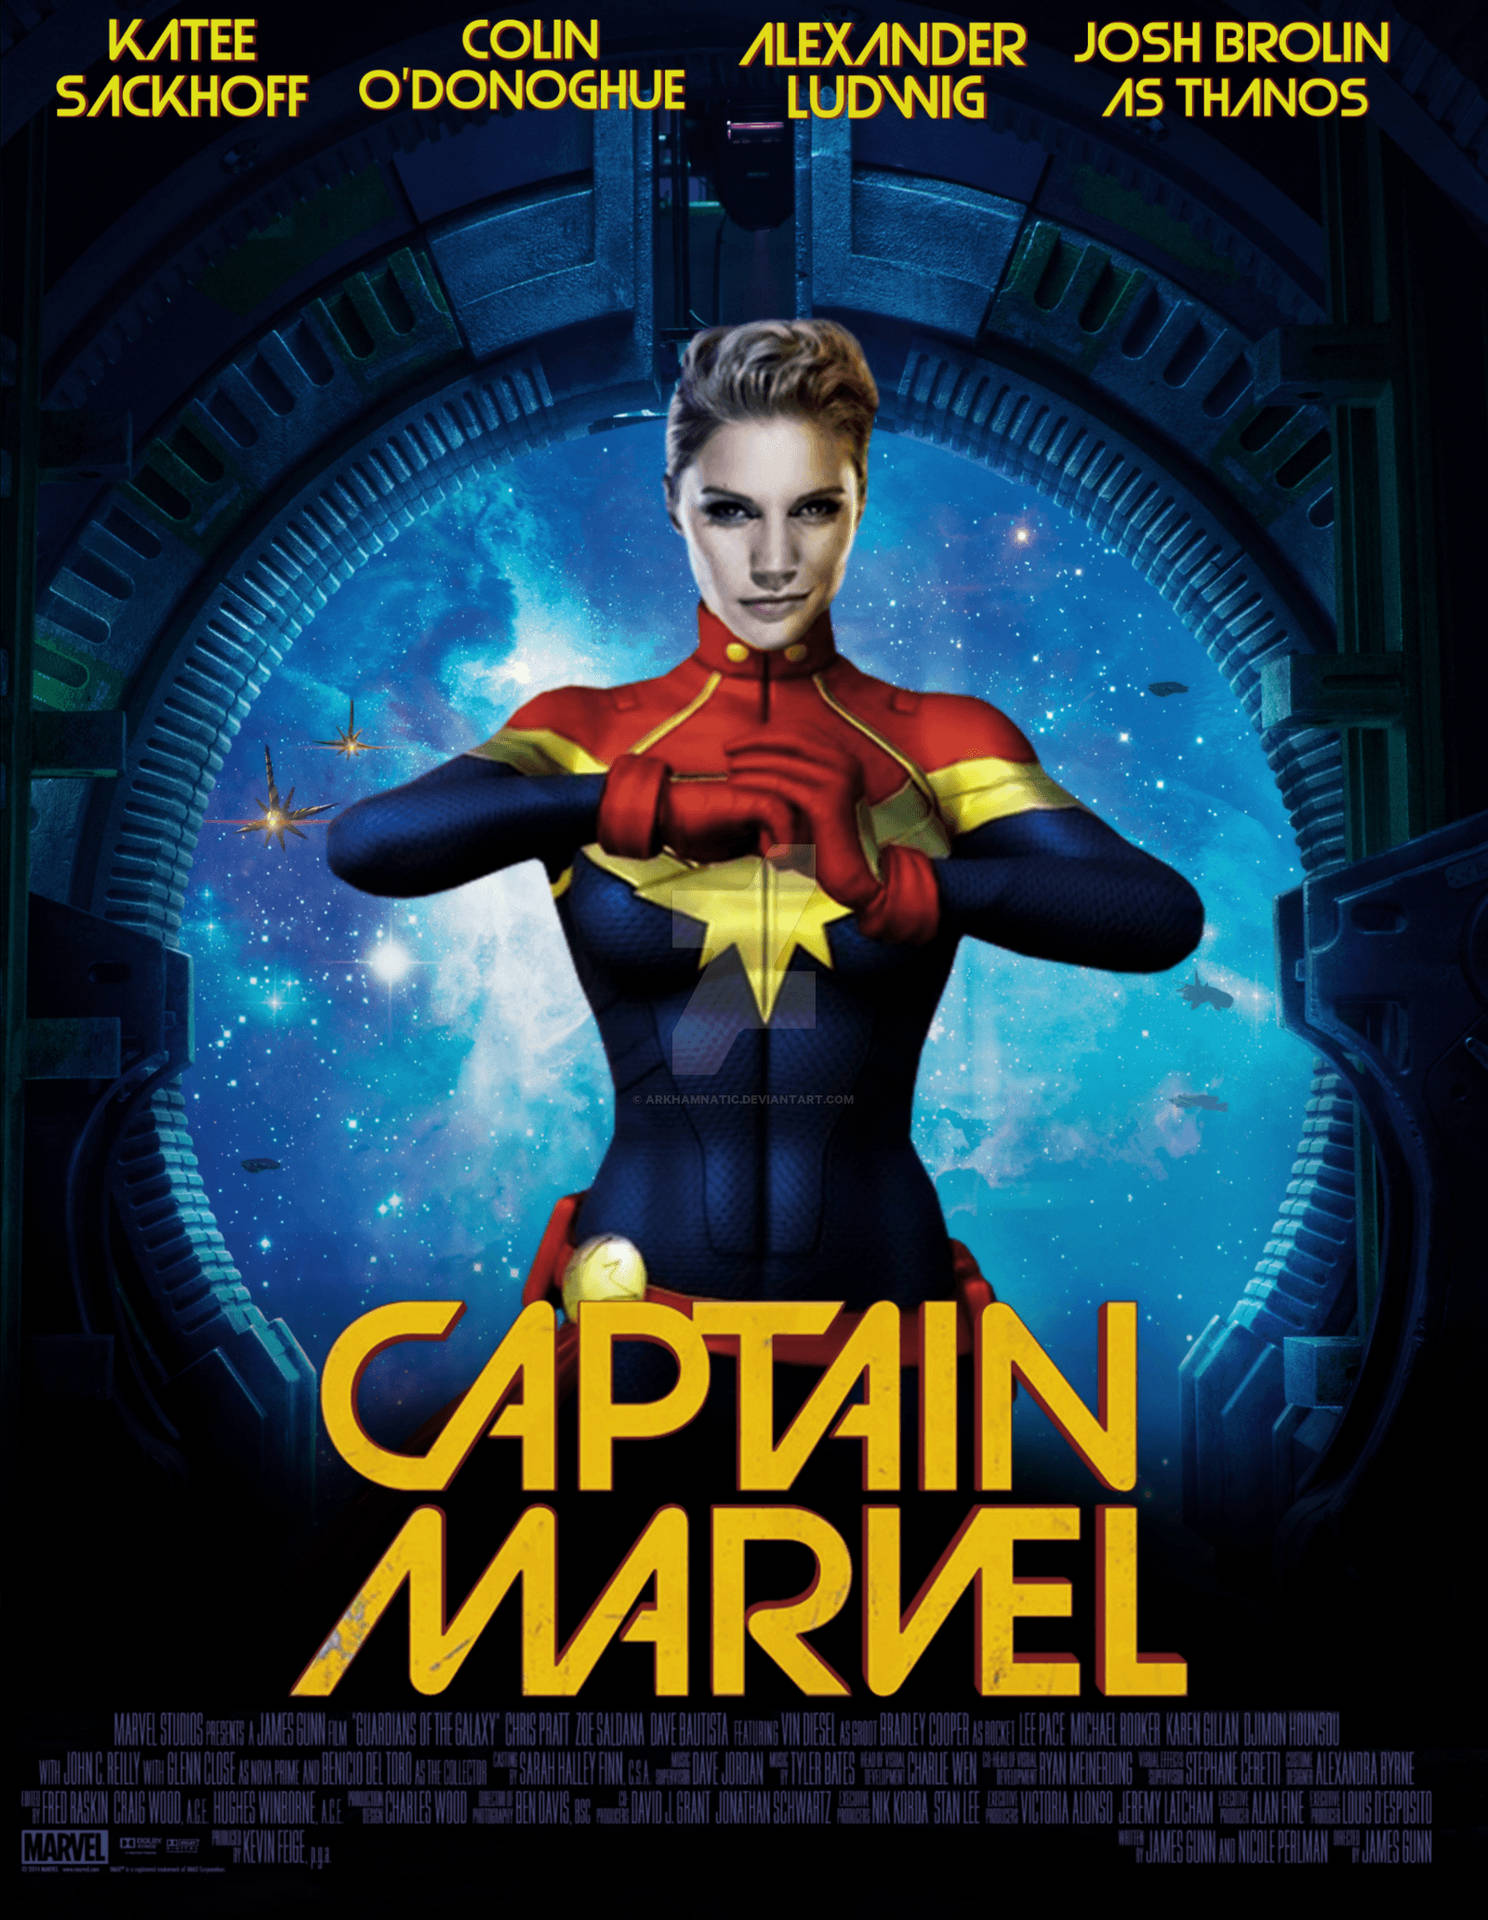 Follow the journey of Captain Marvel! Wallpaper